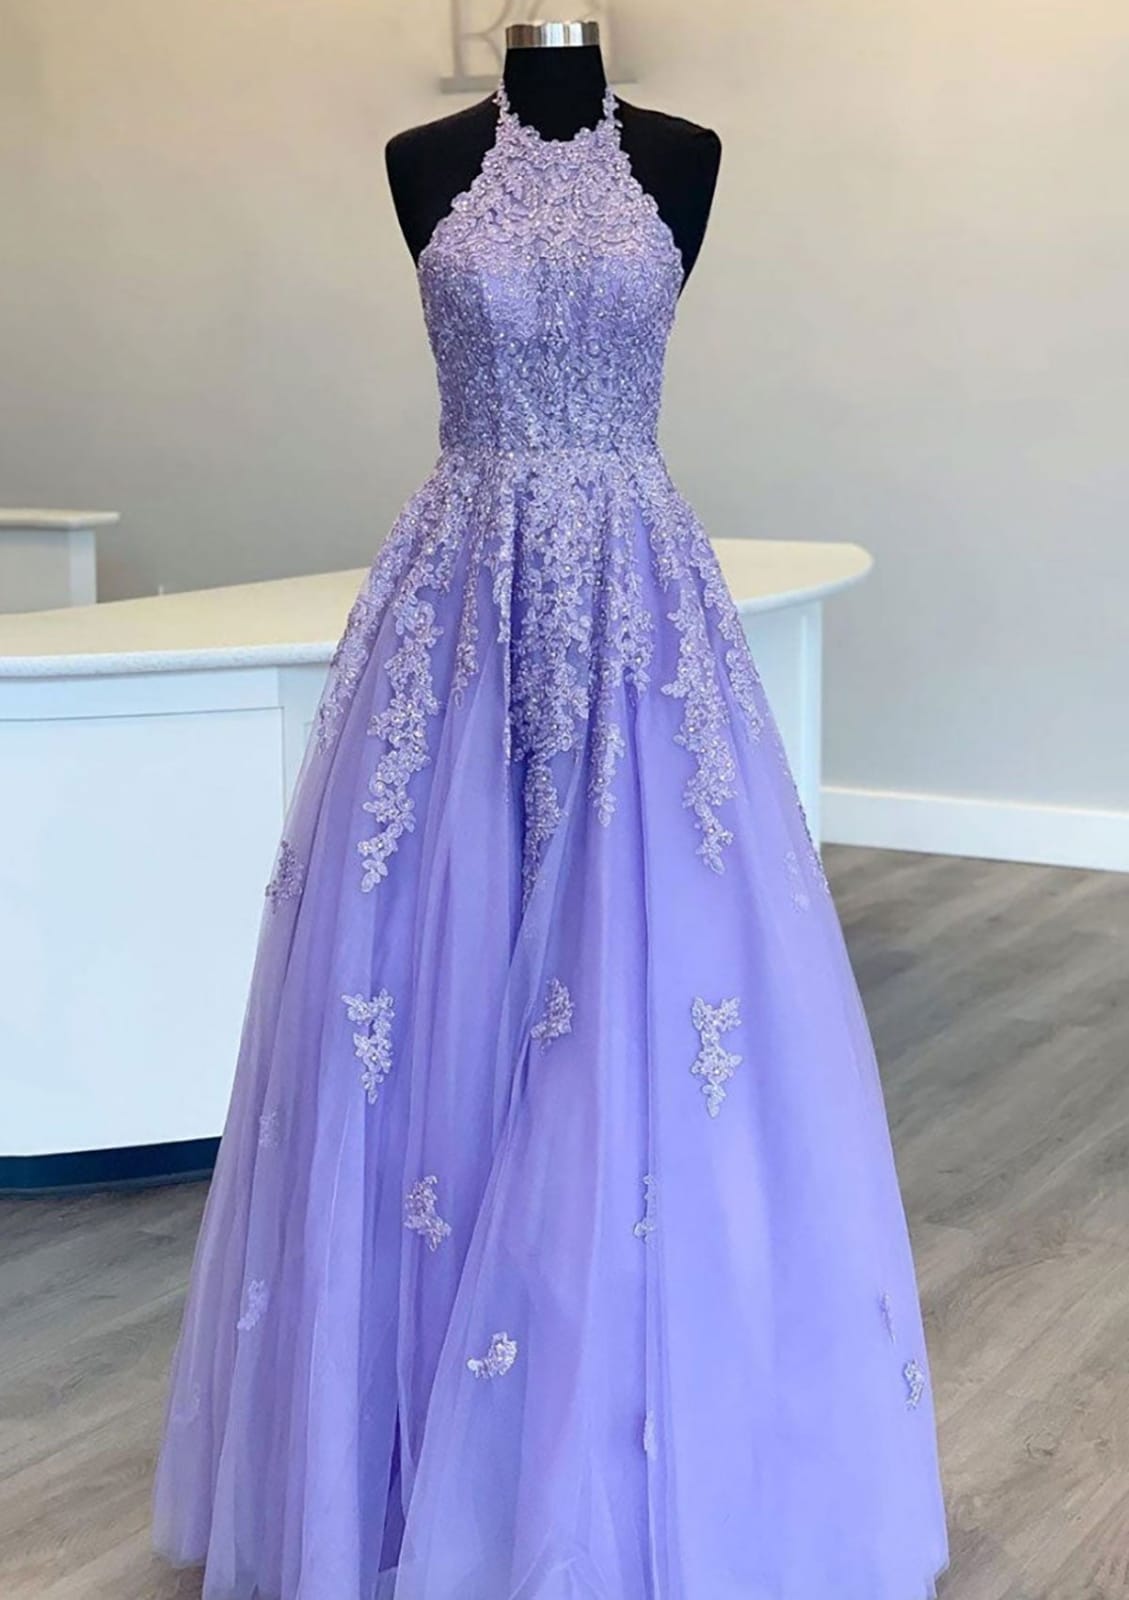 Purple Juniors Bead Halter Top Short Prom Dress | Homecoming Dress